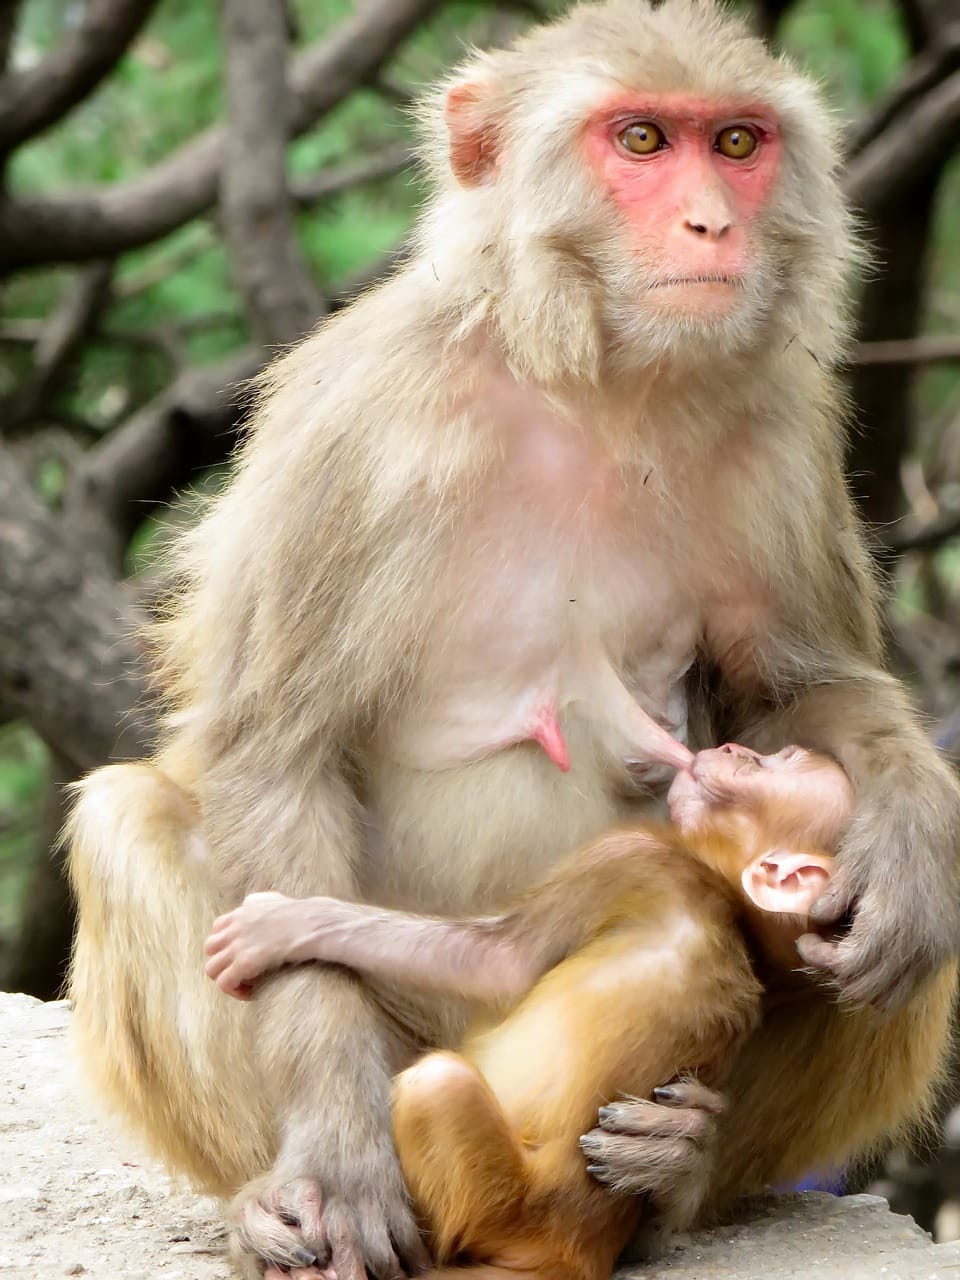 guenon feeding baby monkey